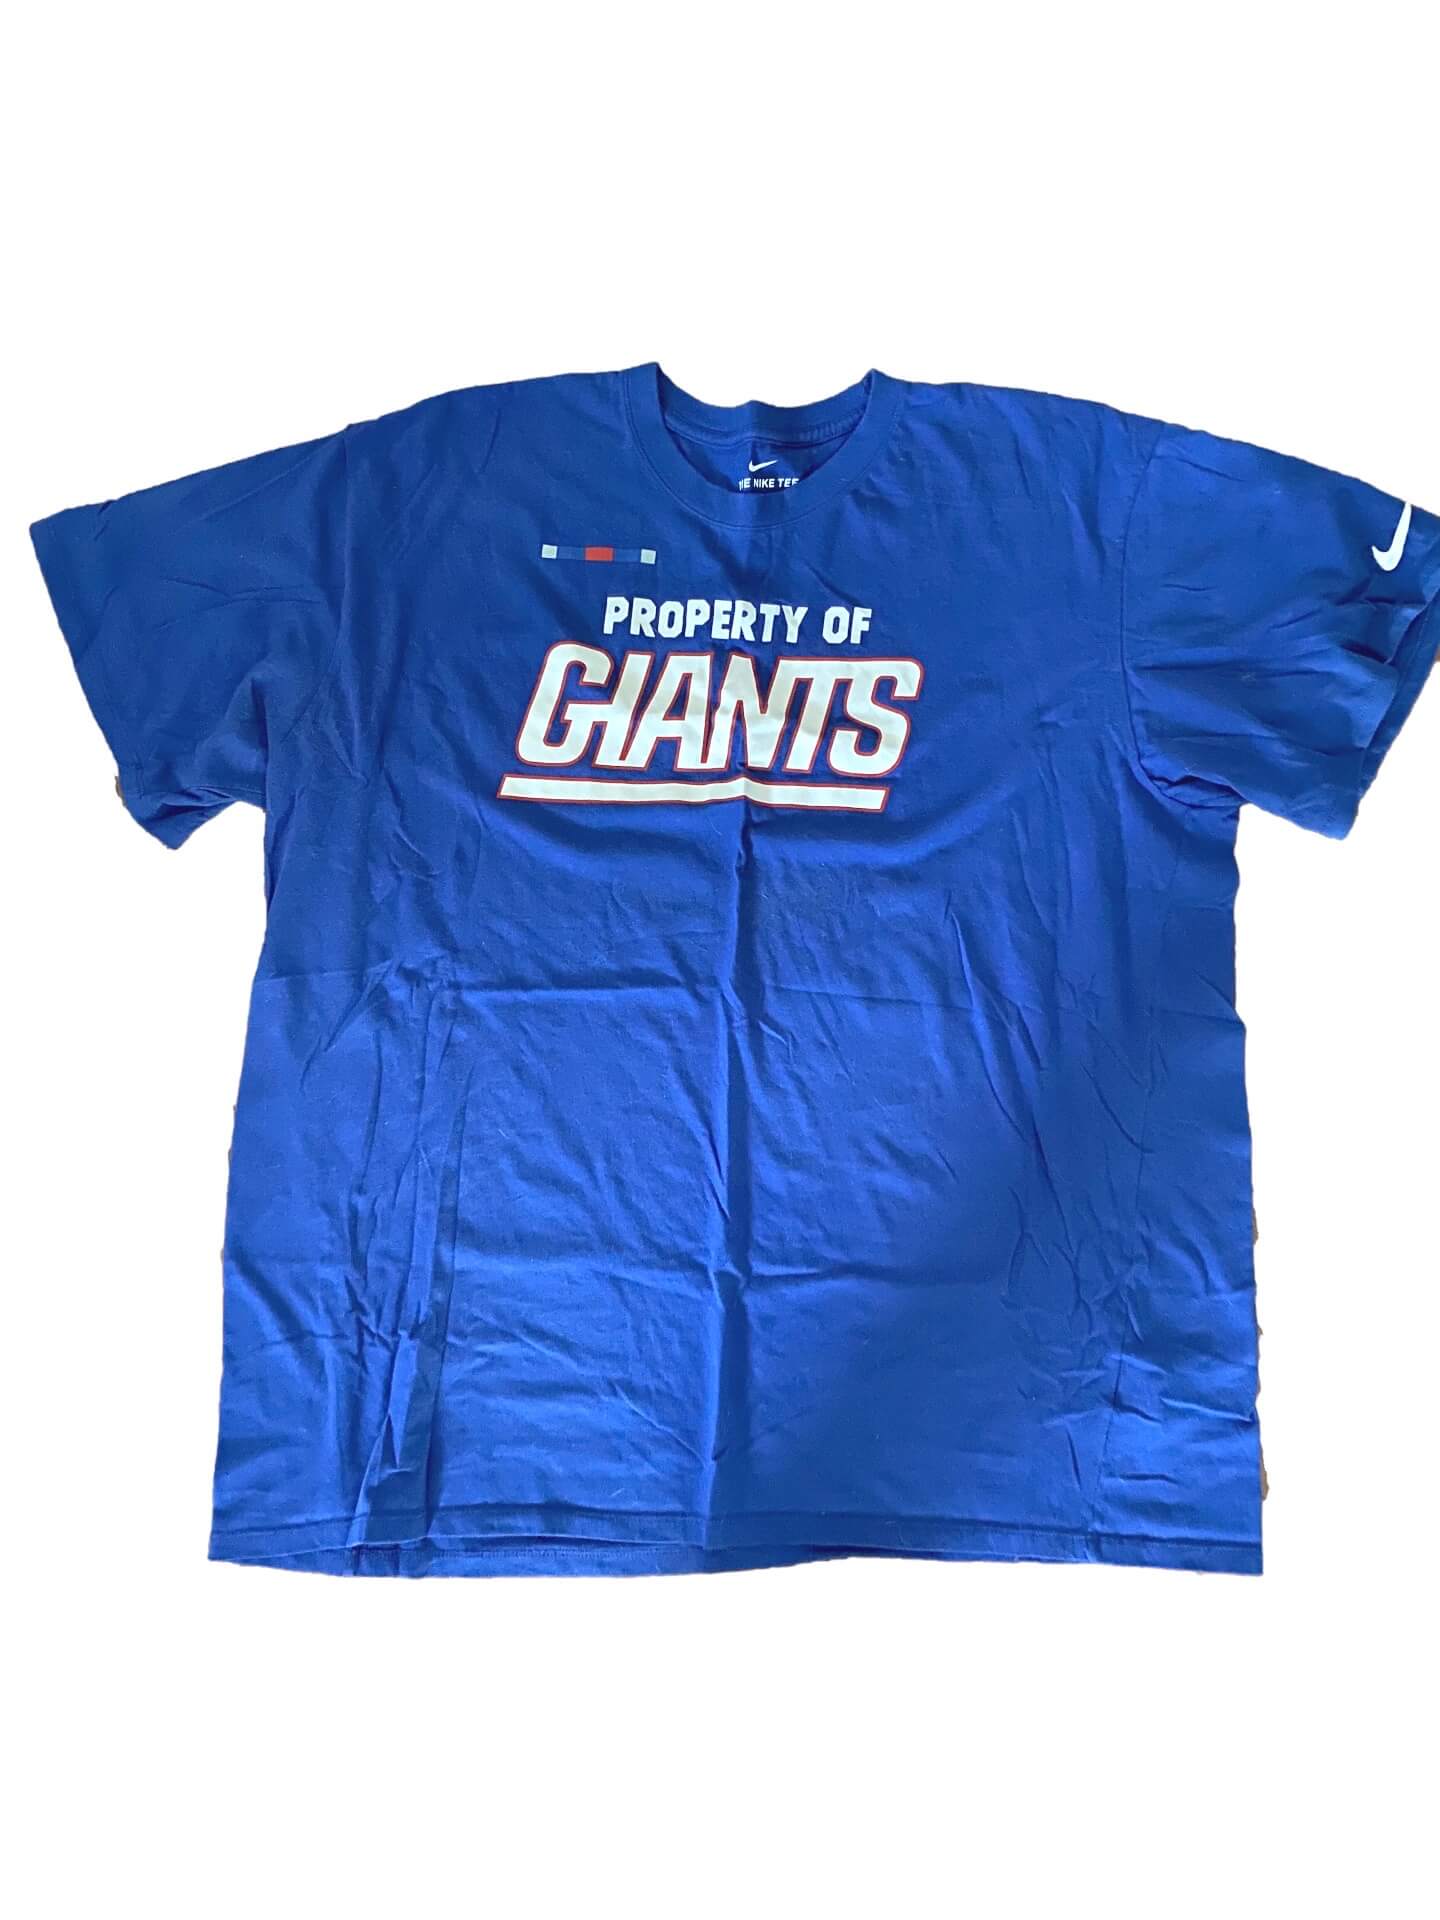 giants nike shirt